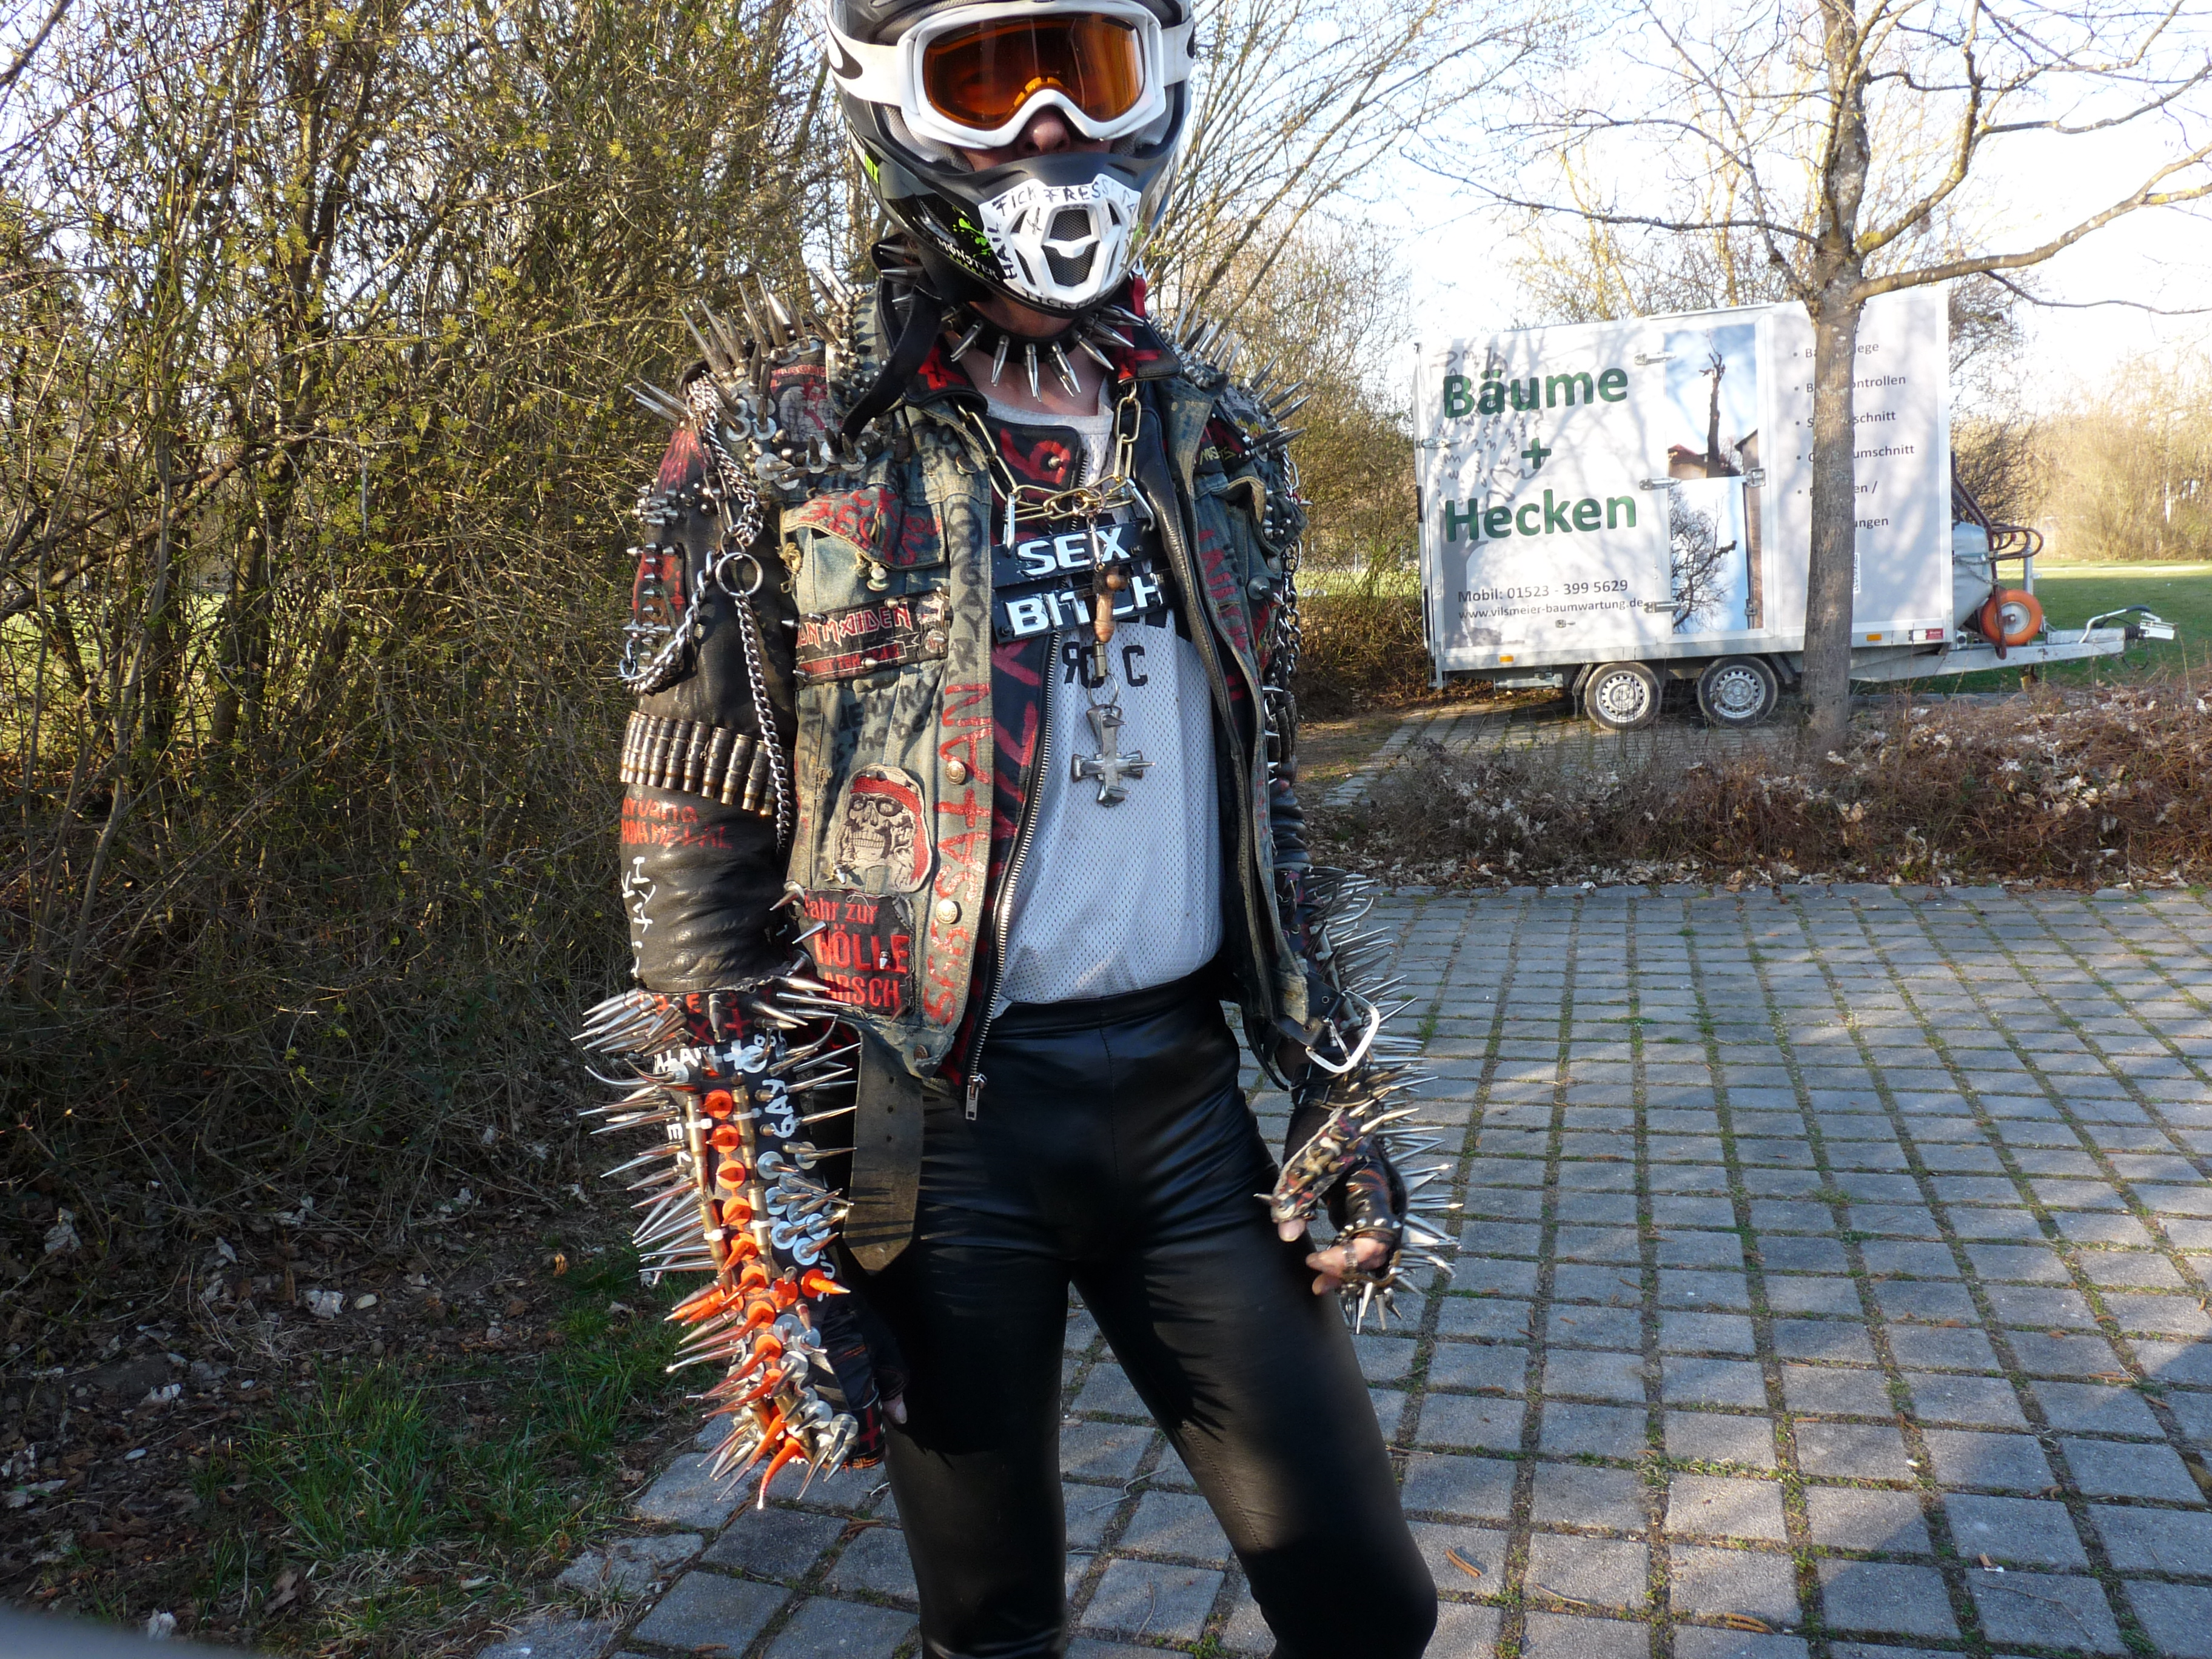 Blackmetal Bikepunk in tight leatherleggings